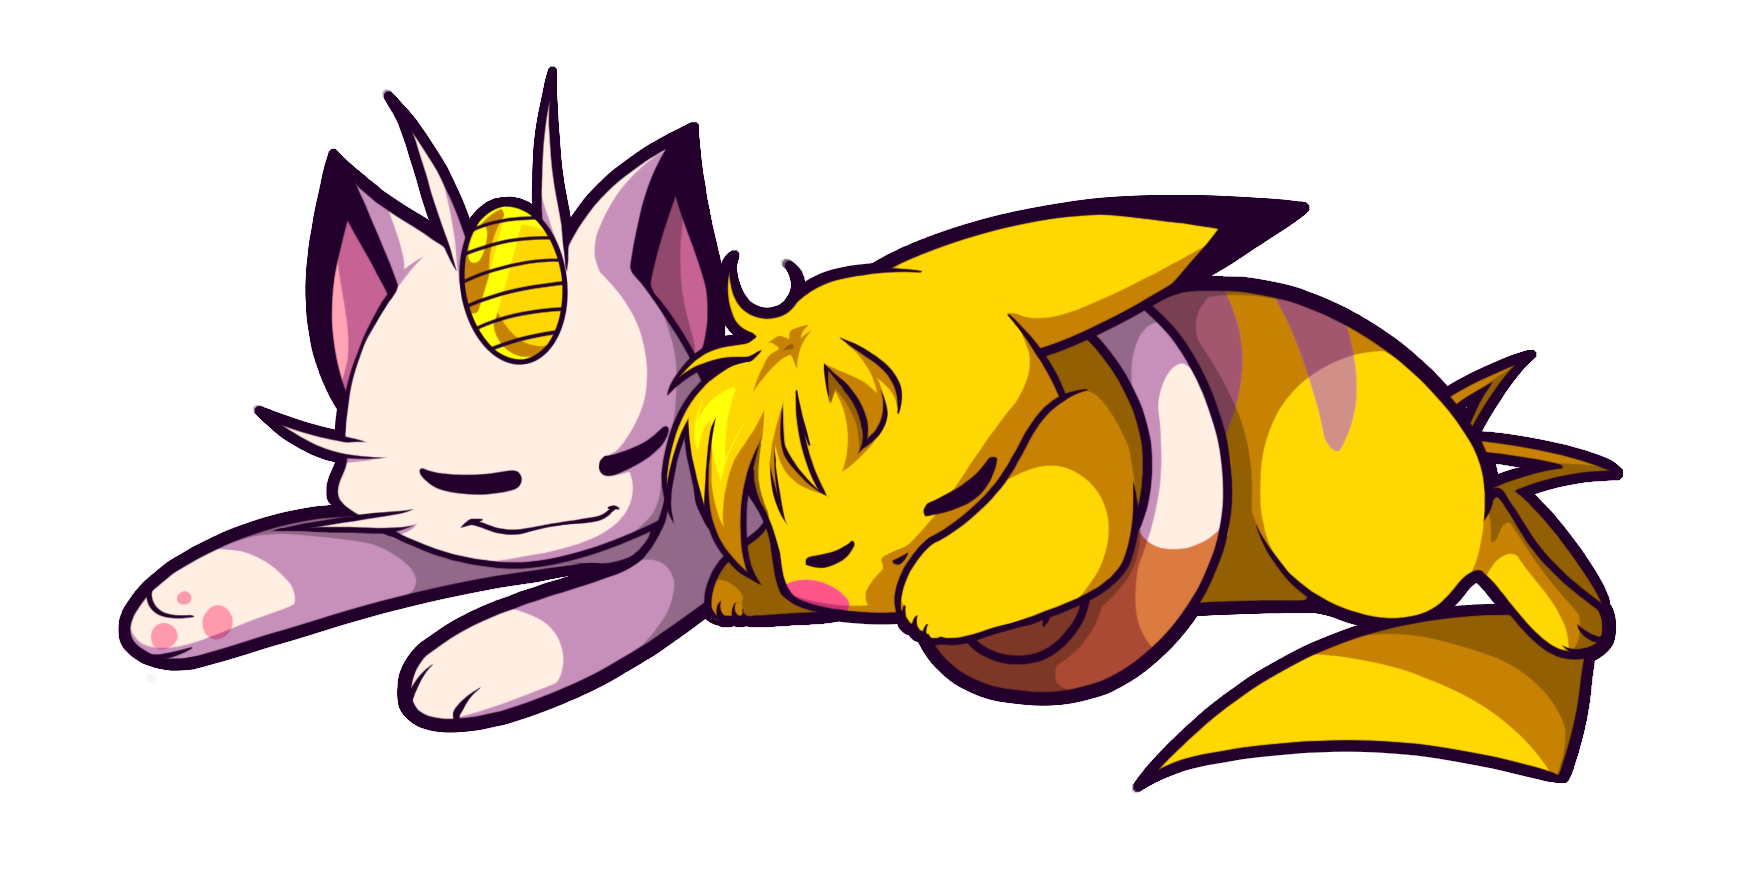 Dos as a Meowth with Ootachi as a Pikachu. Good ship.